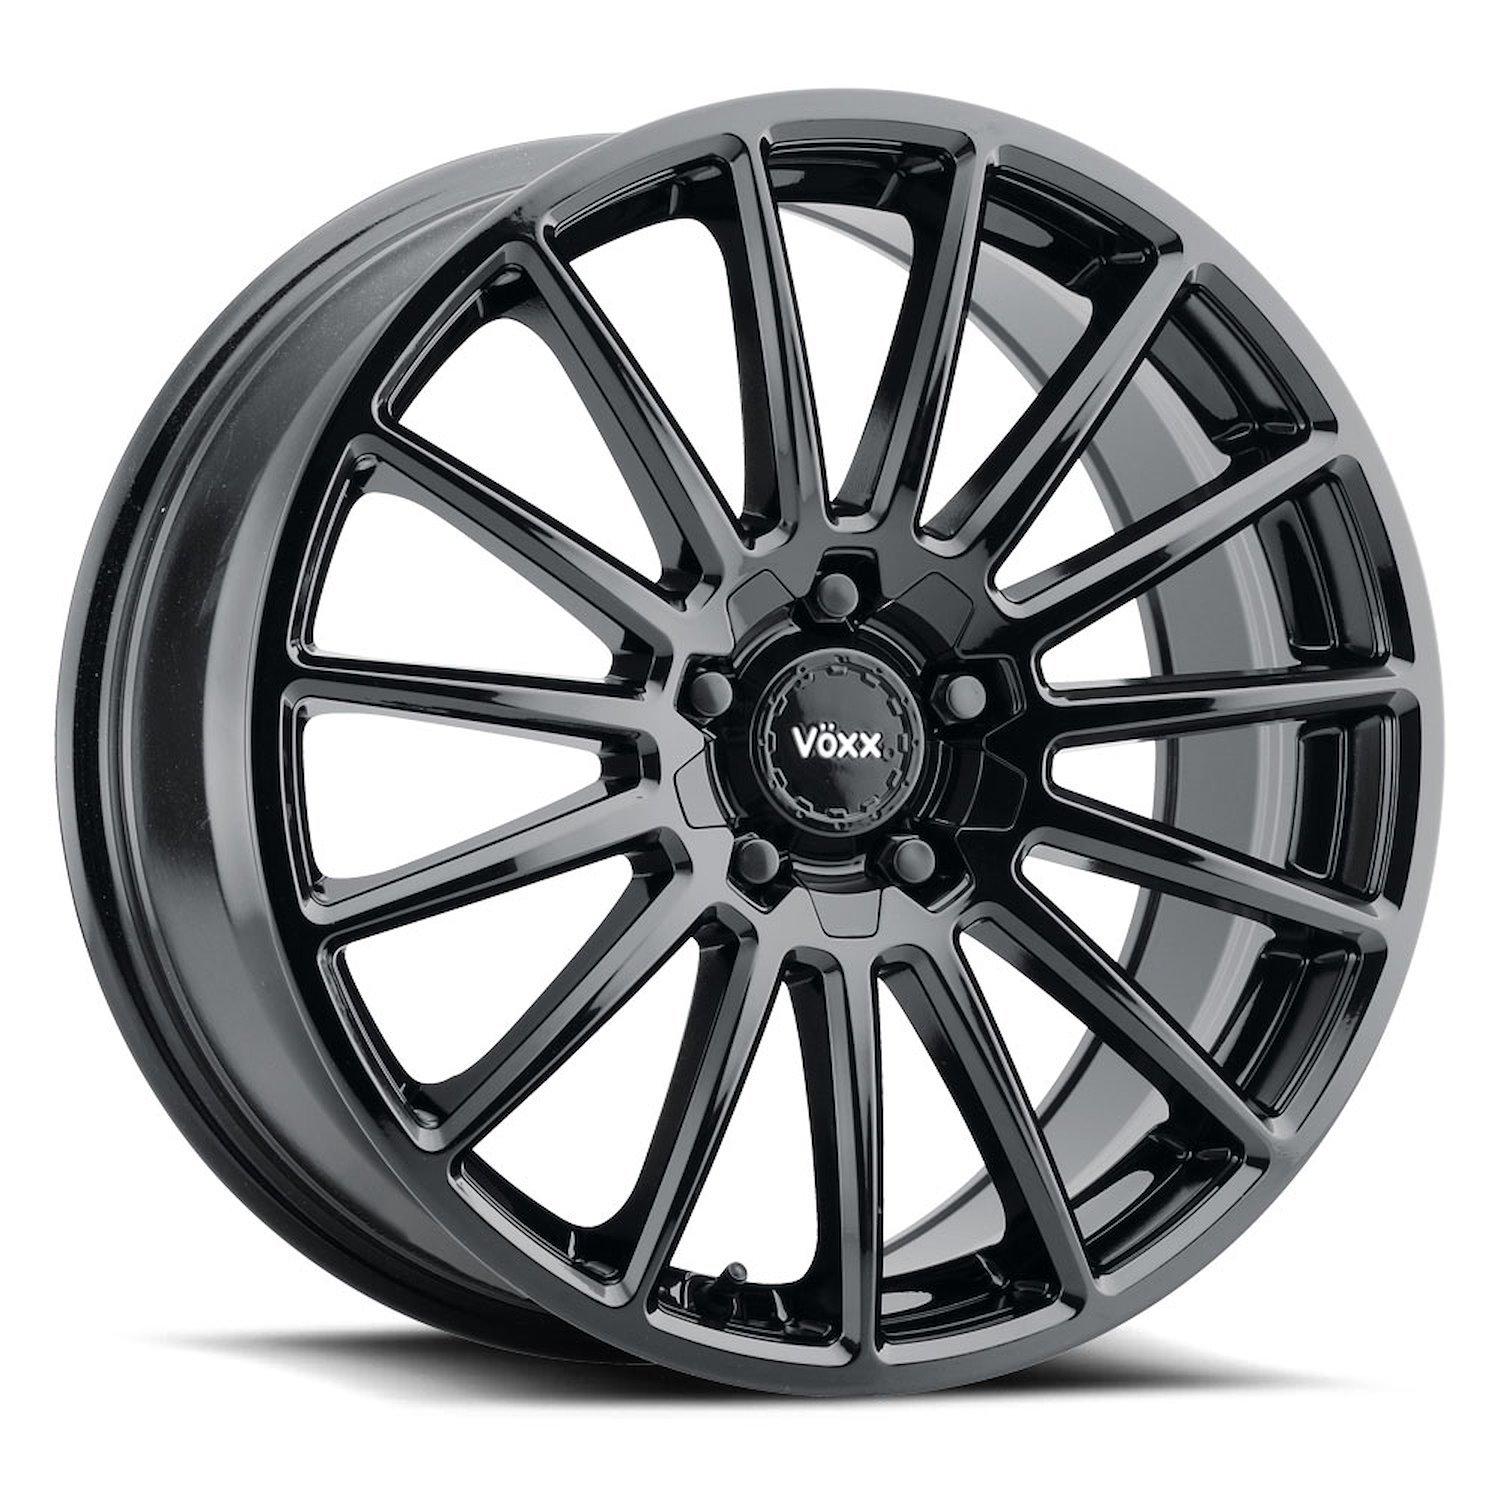 CAS 670-5008-20 GB Casina Wheel [Size: 16" x 7"] Finish: Gloss Black